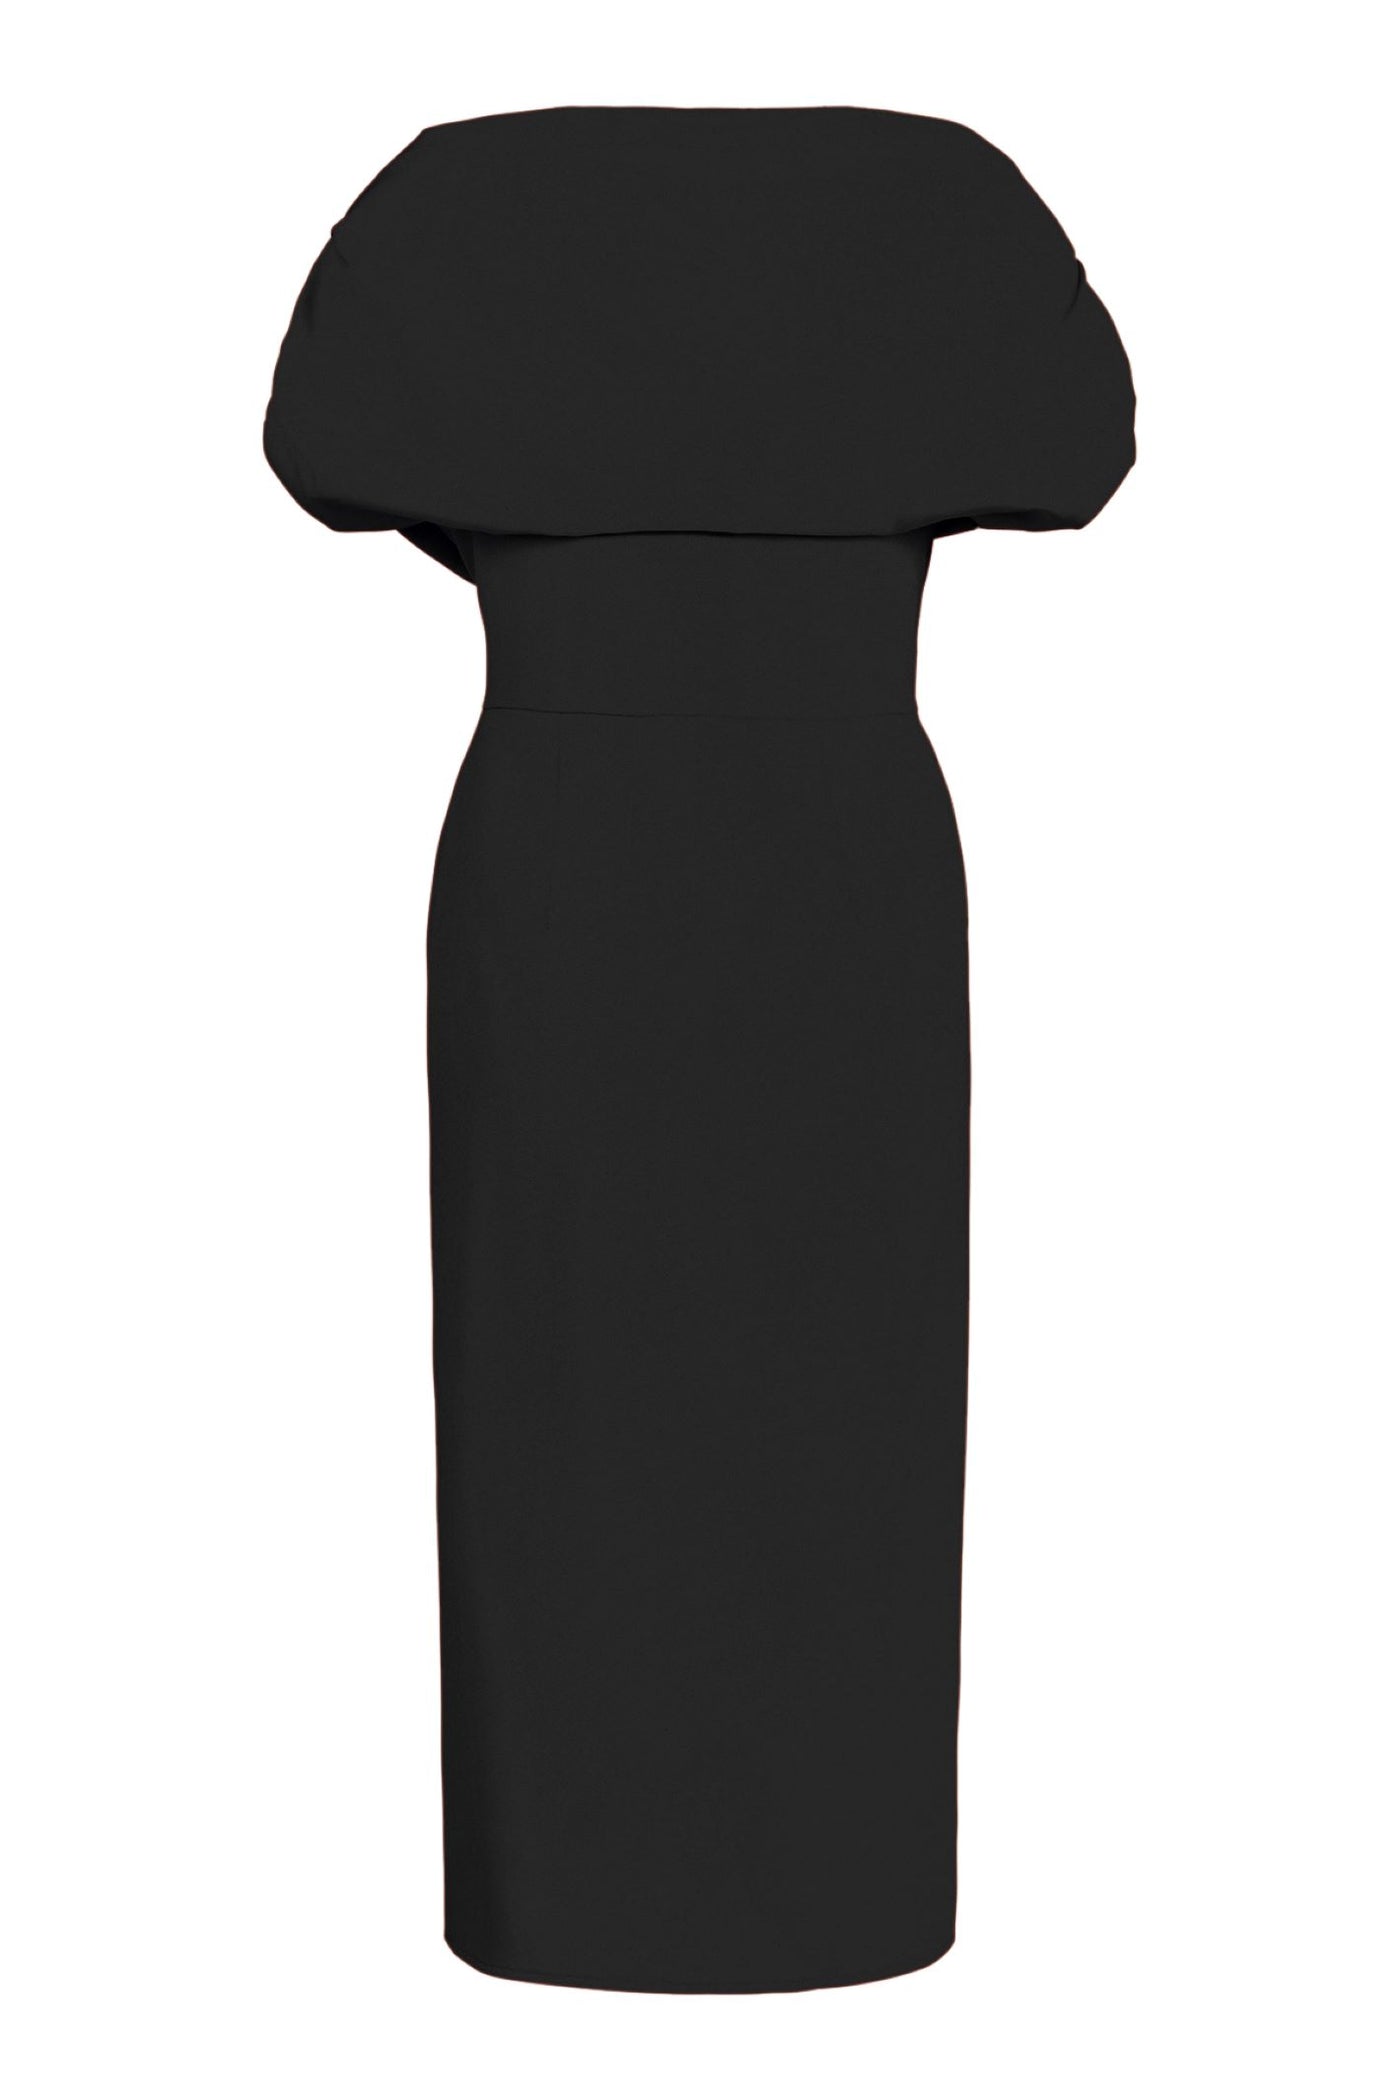 Tia Gomaye 28862 Black Short Sleeved Maxi Black Dress